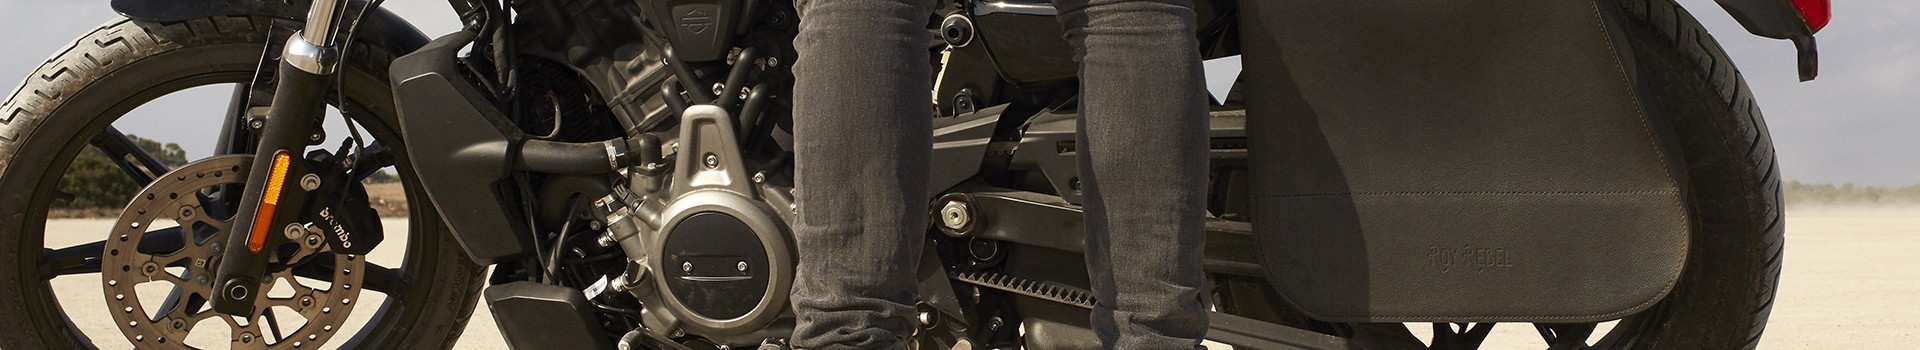 Soportes de bolsa de moto para Harley Davidson